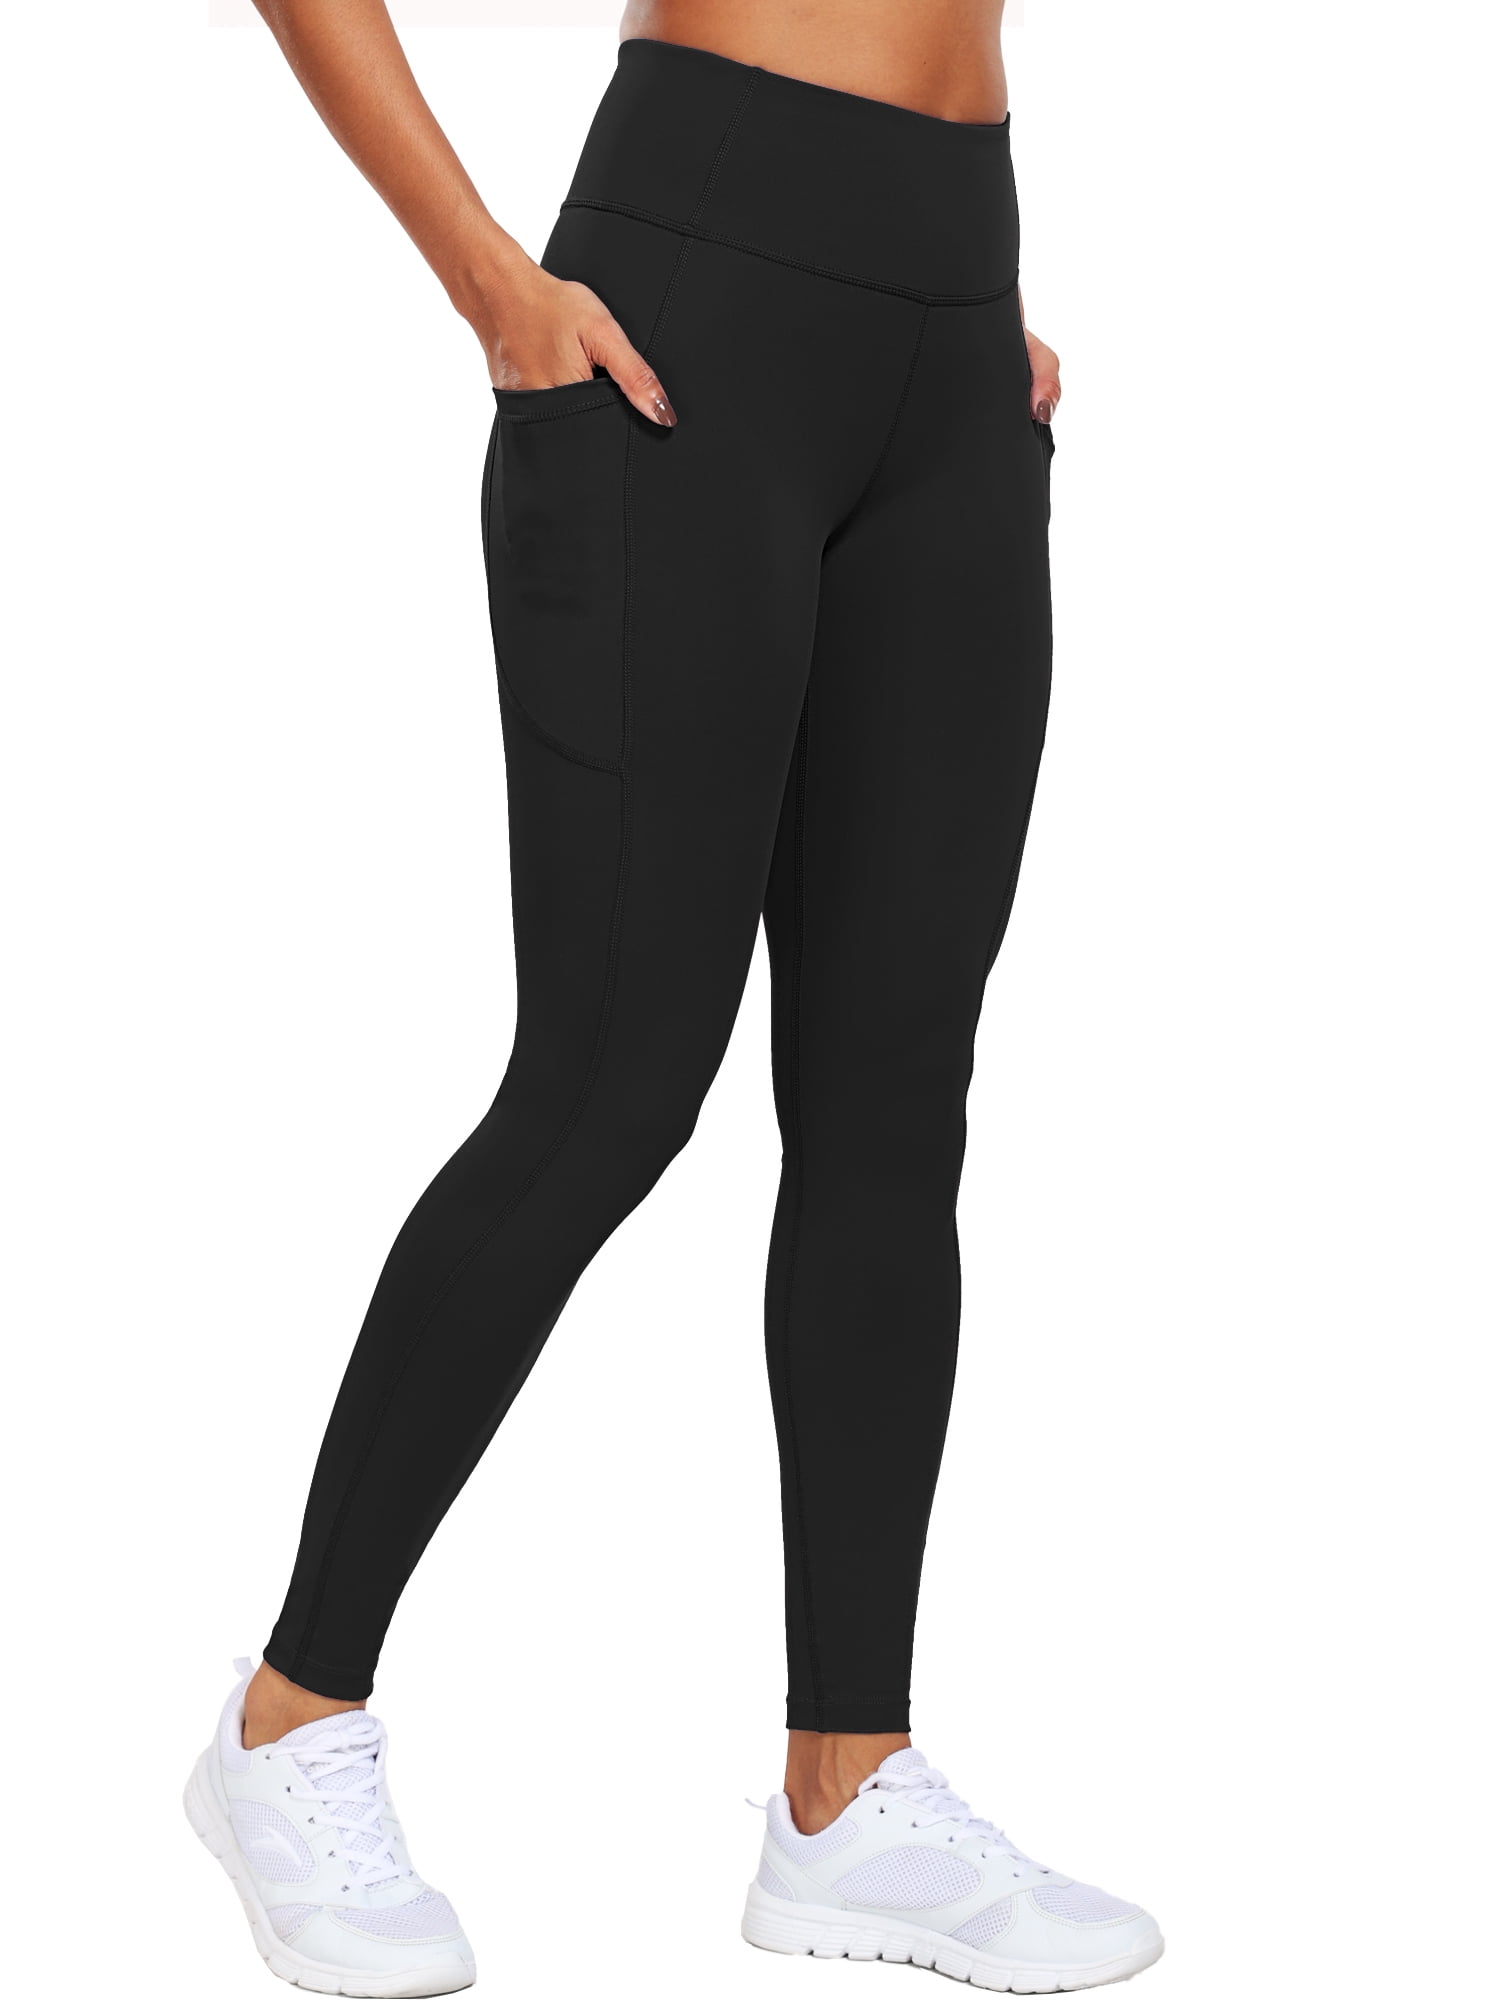 Avia Womens Black Fashion Velour Legging Yoga Athletic Workout Pant Size ZZ